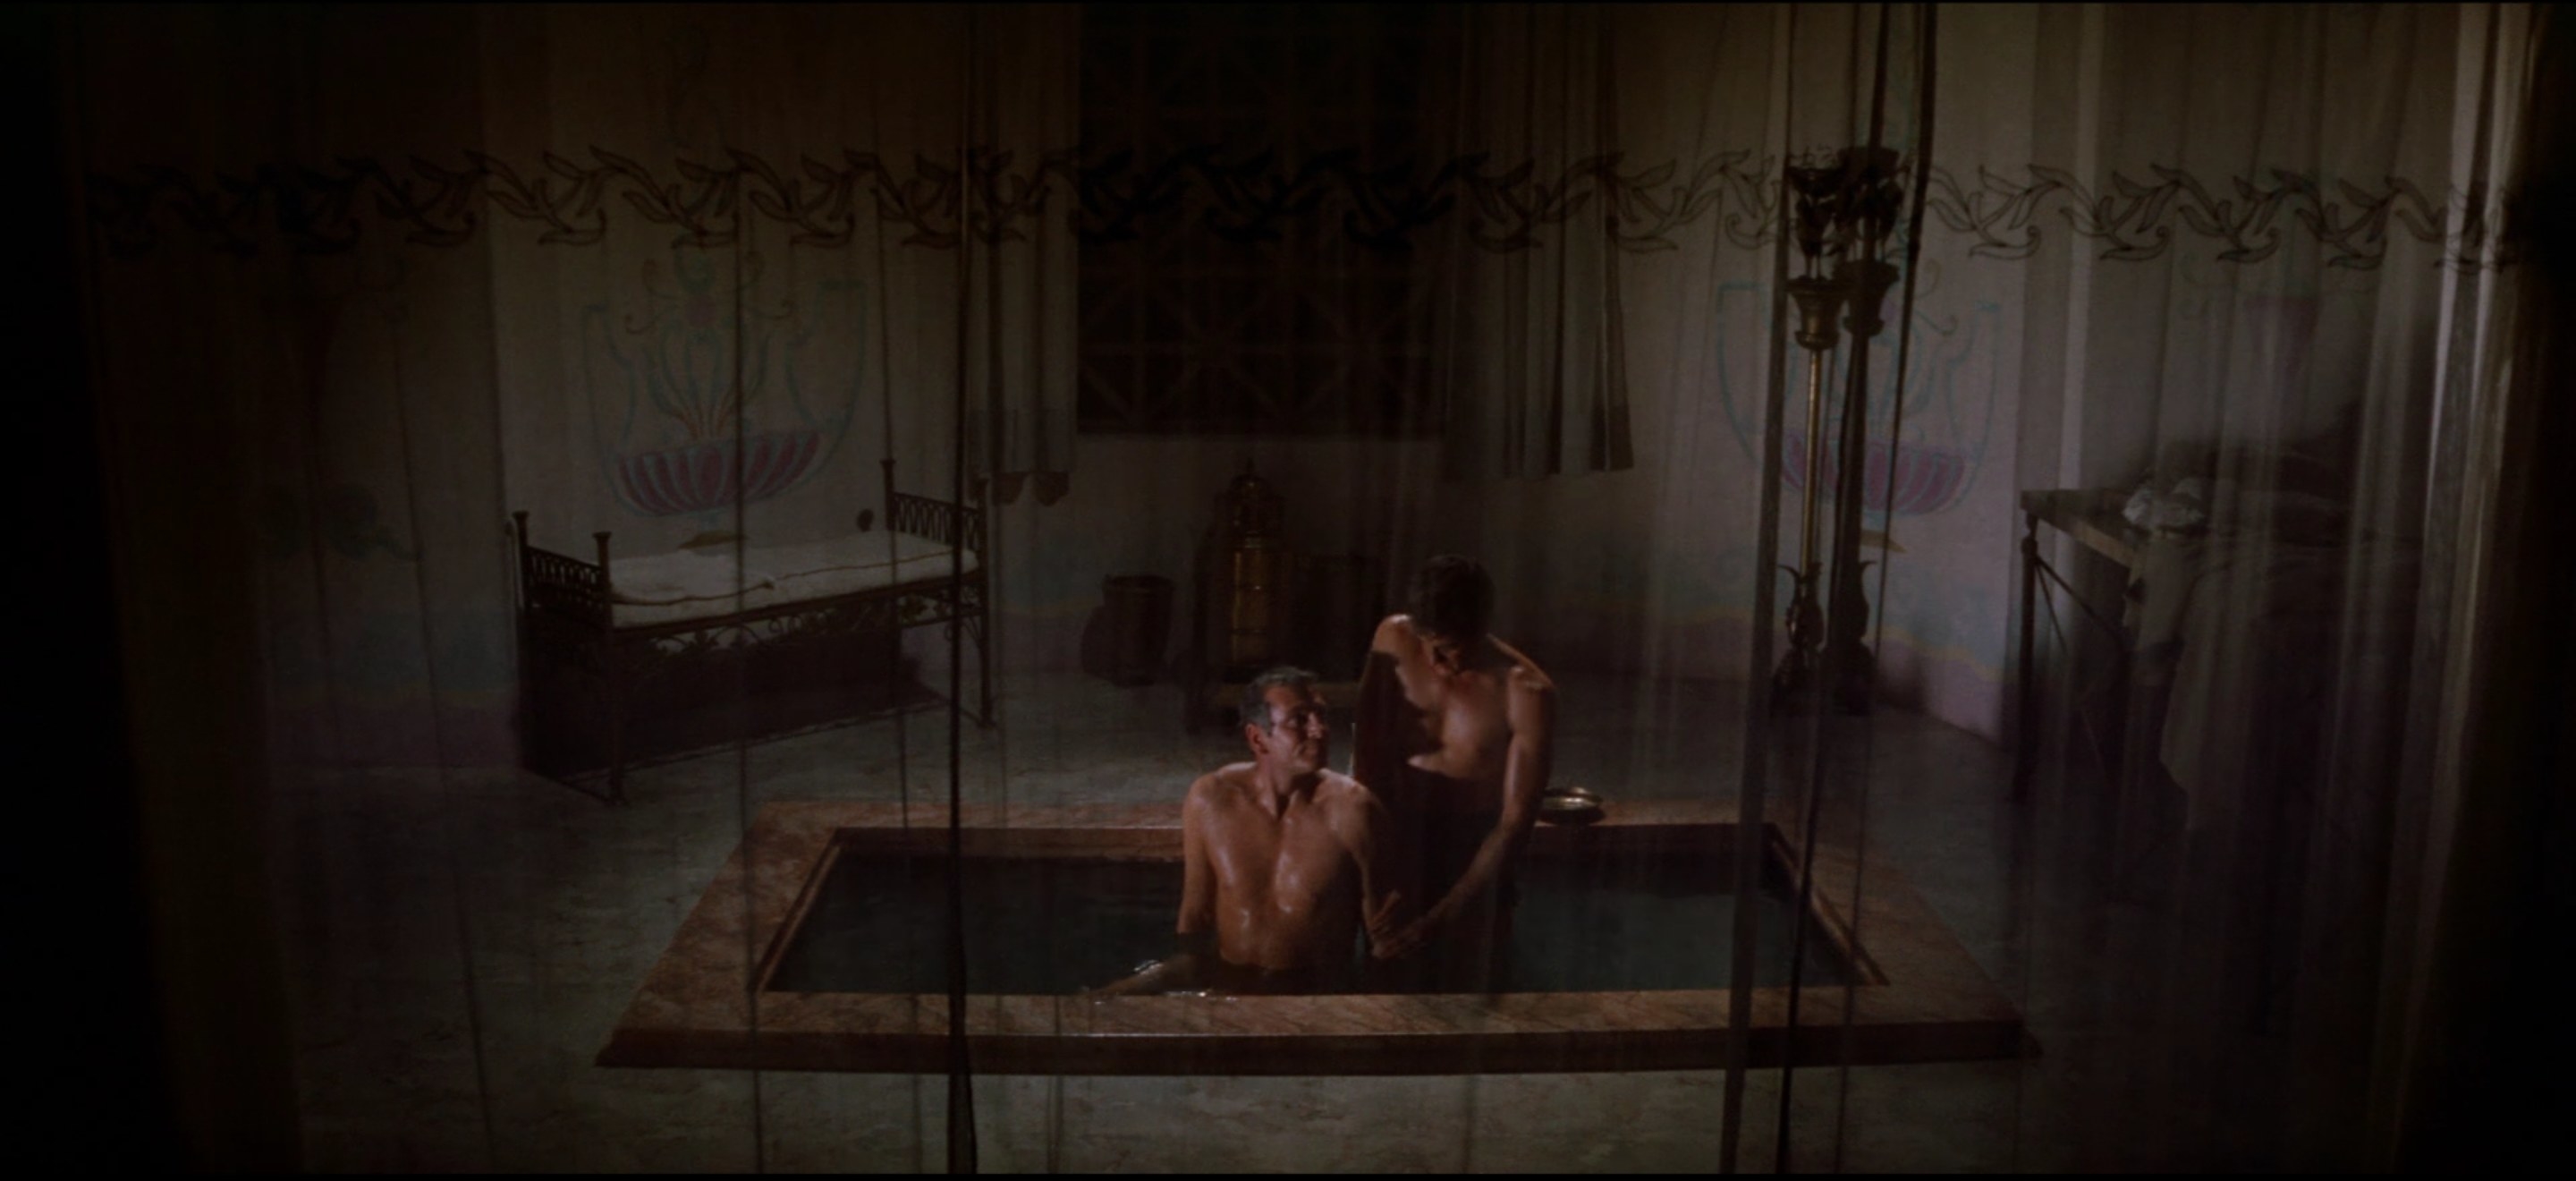 Two men in a Roman-style bathtub